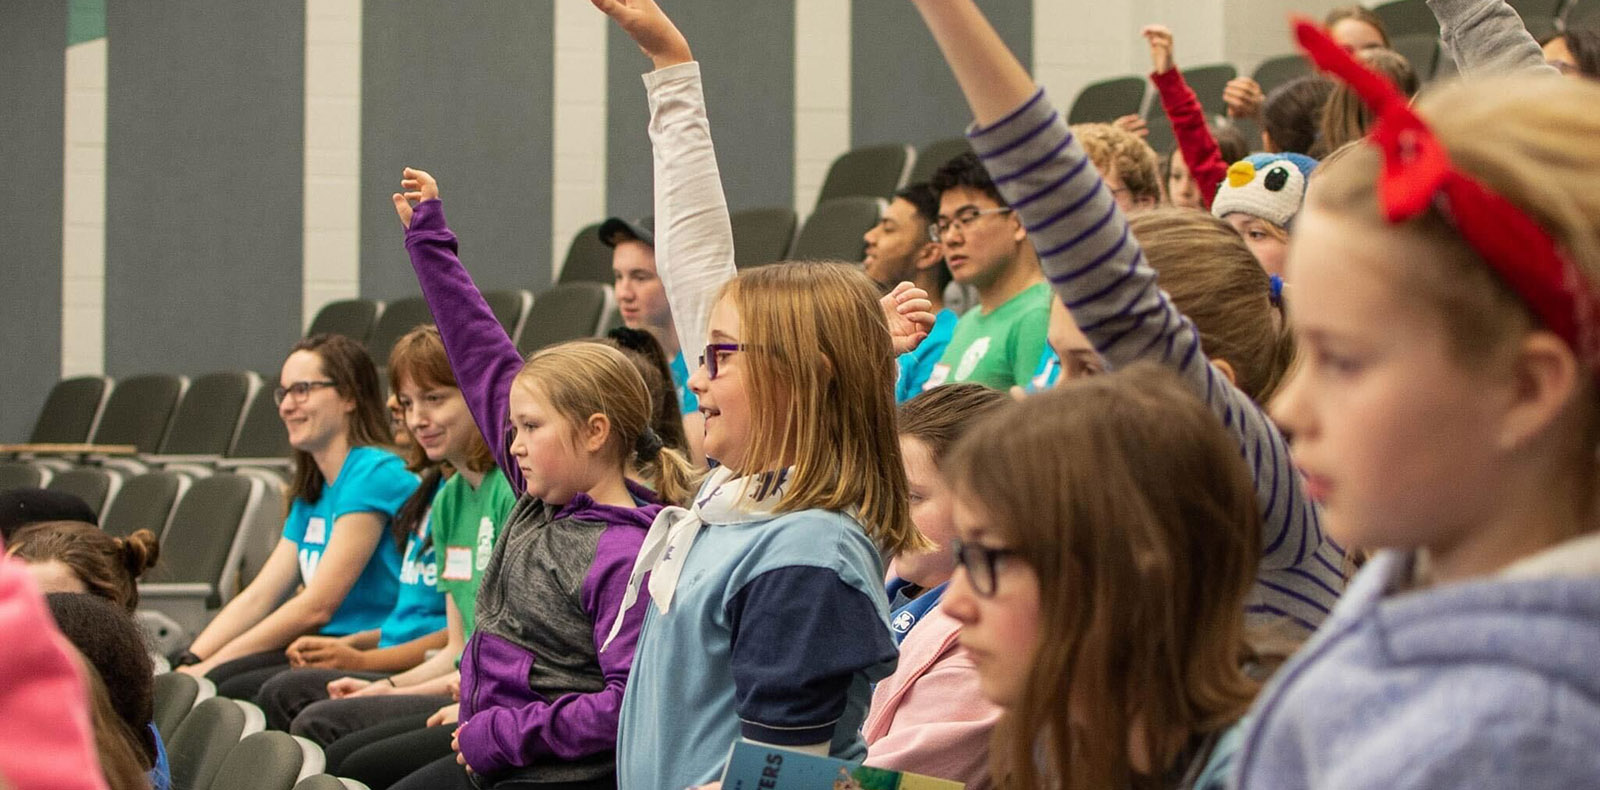 Kids in a classroom raising hands